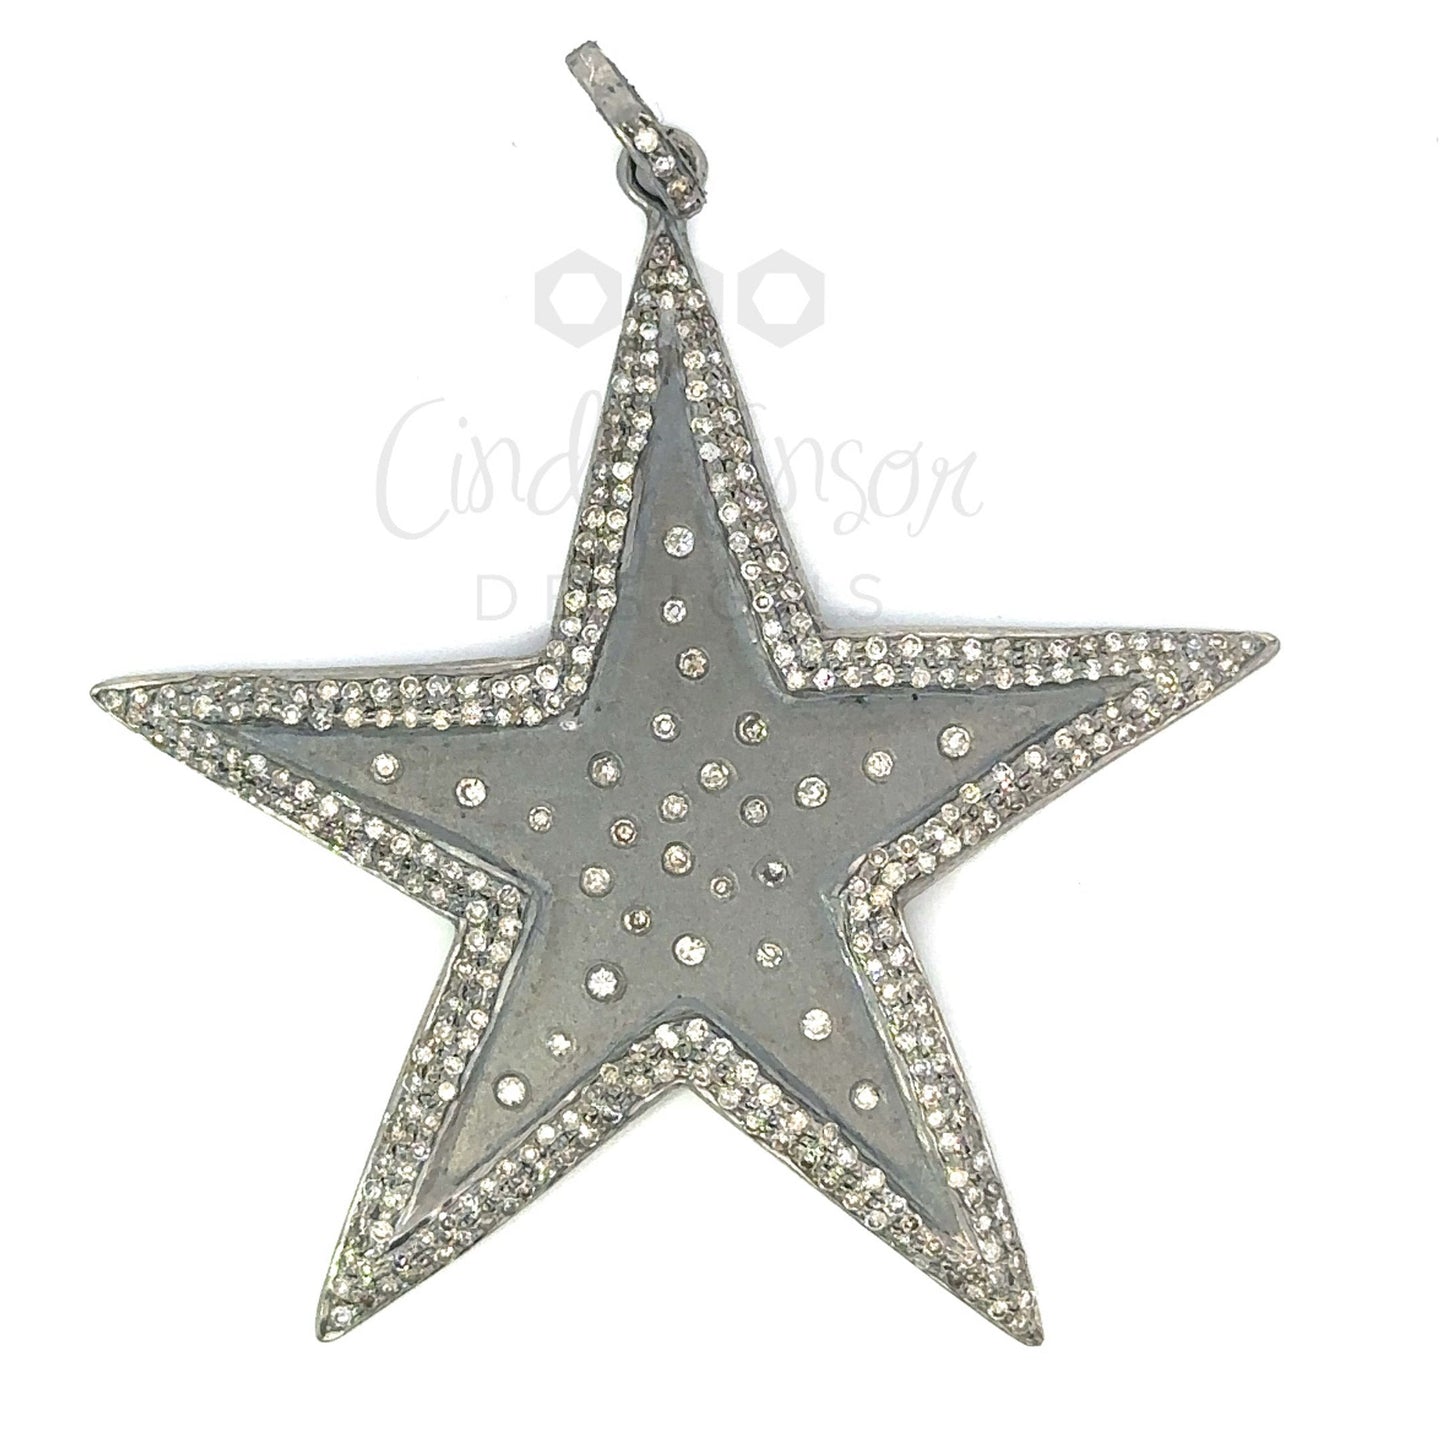 Black Metal Speckled Diamond Star Pendant with Pave Border